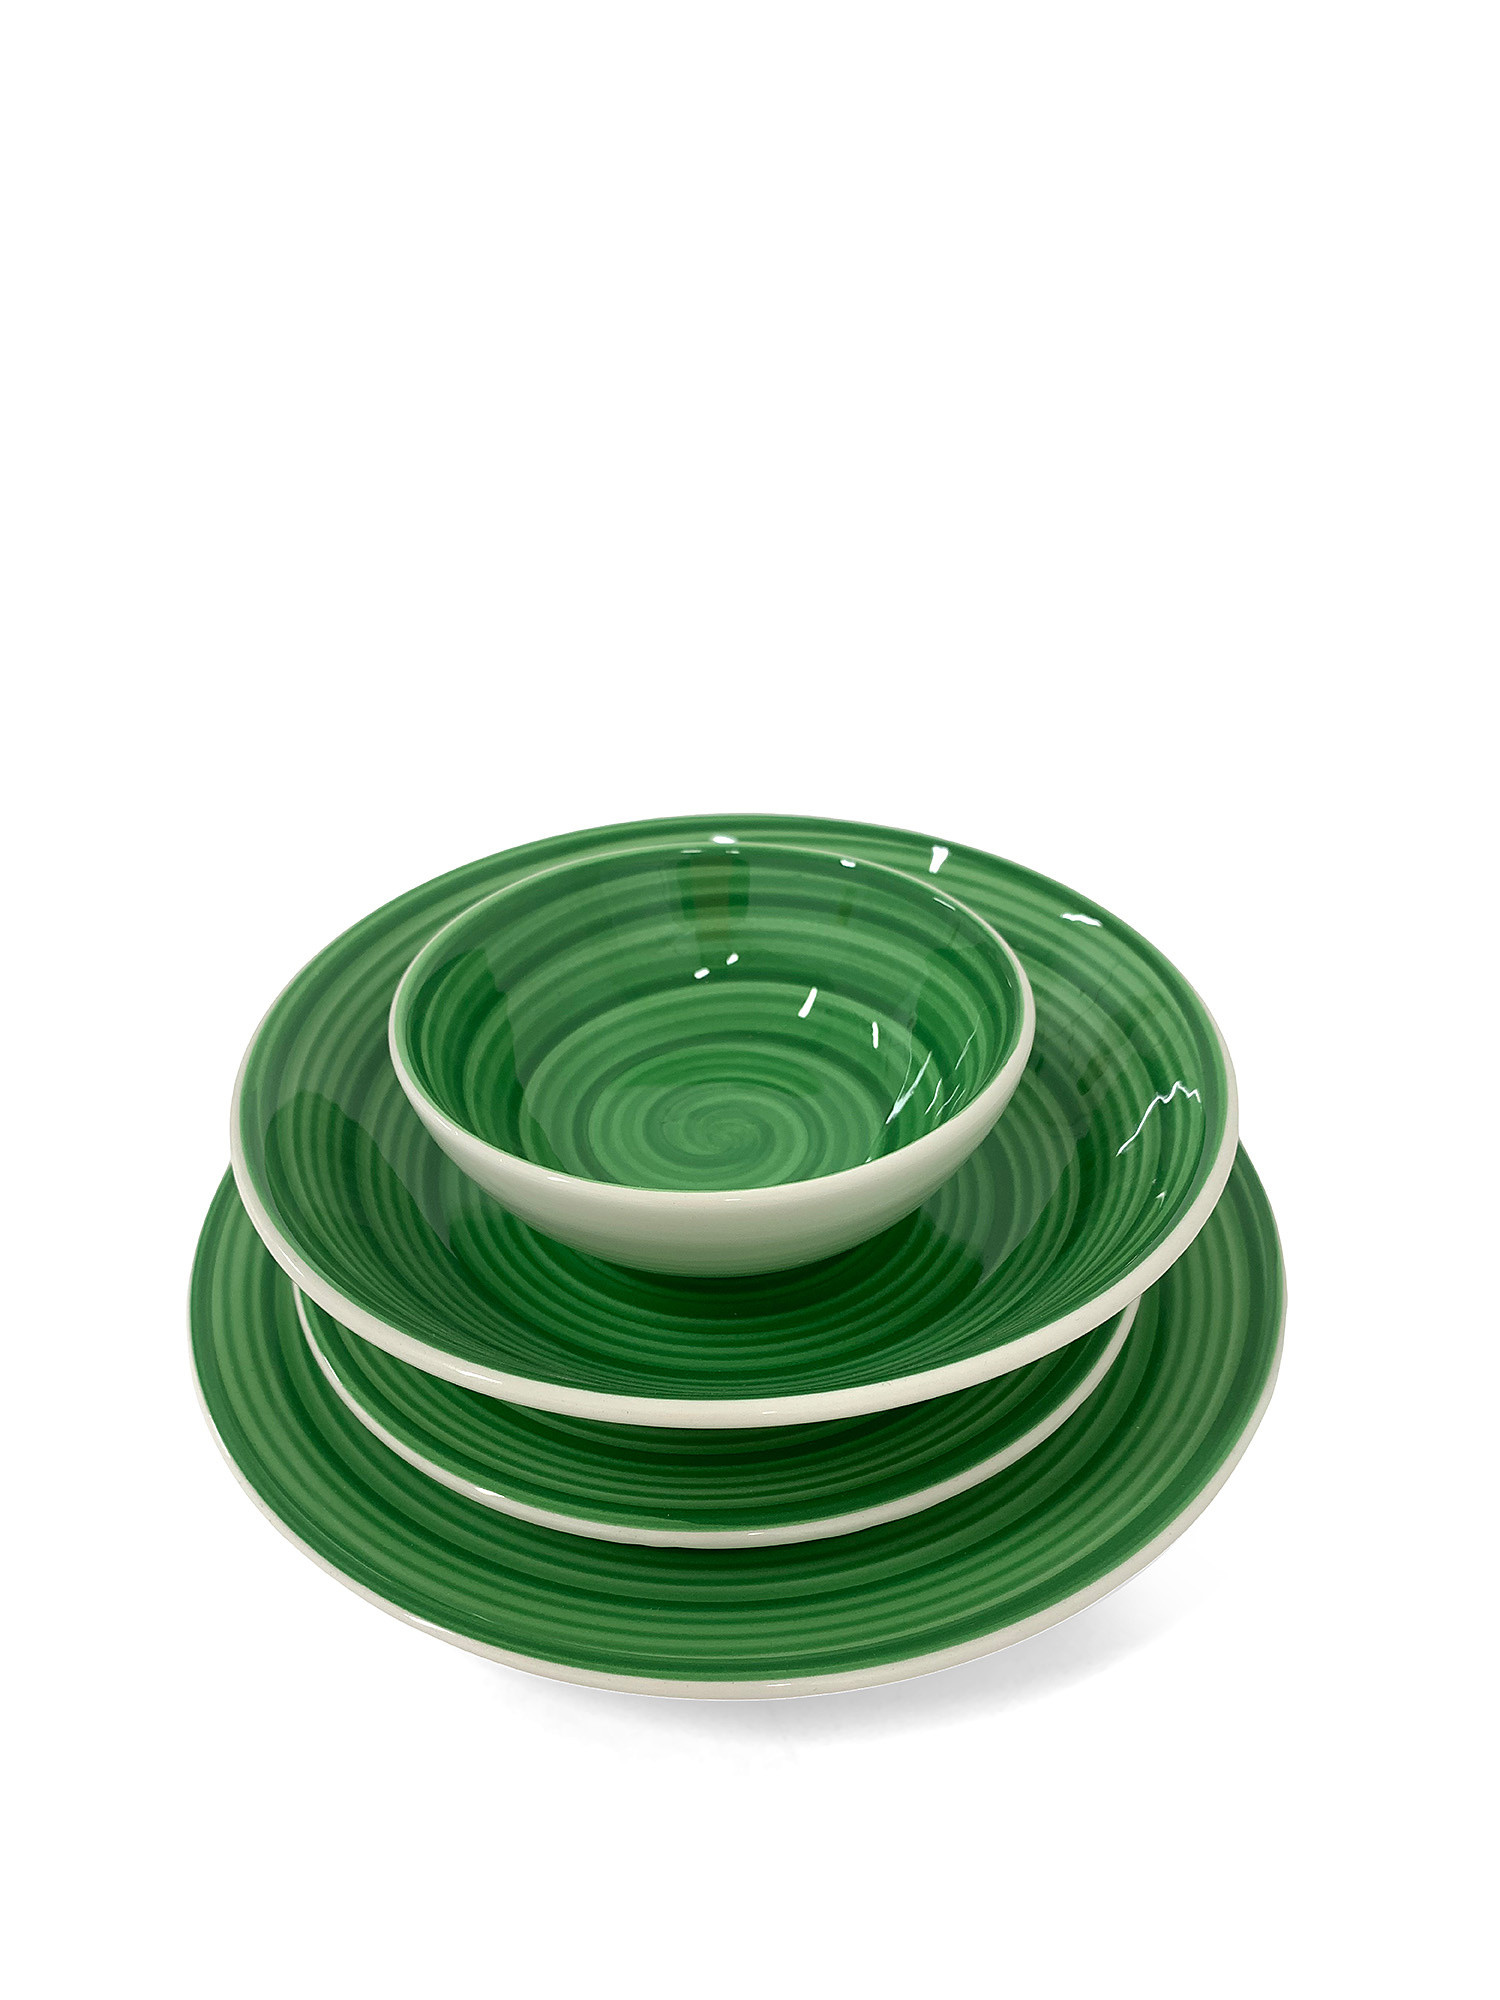 Piatto piano ceramica dipinta a mano Spirale, Verde, large image number 1